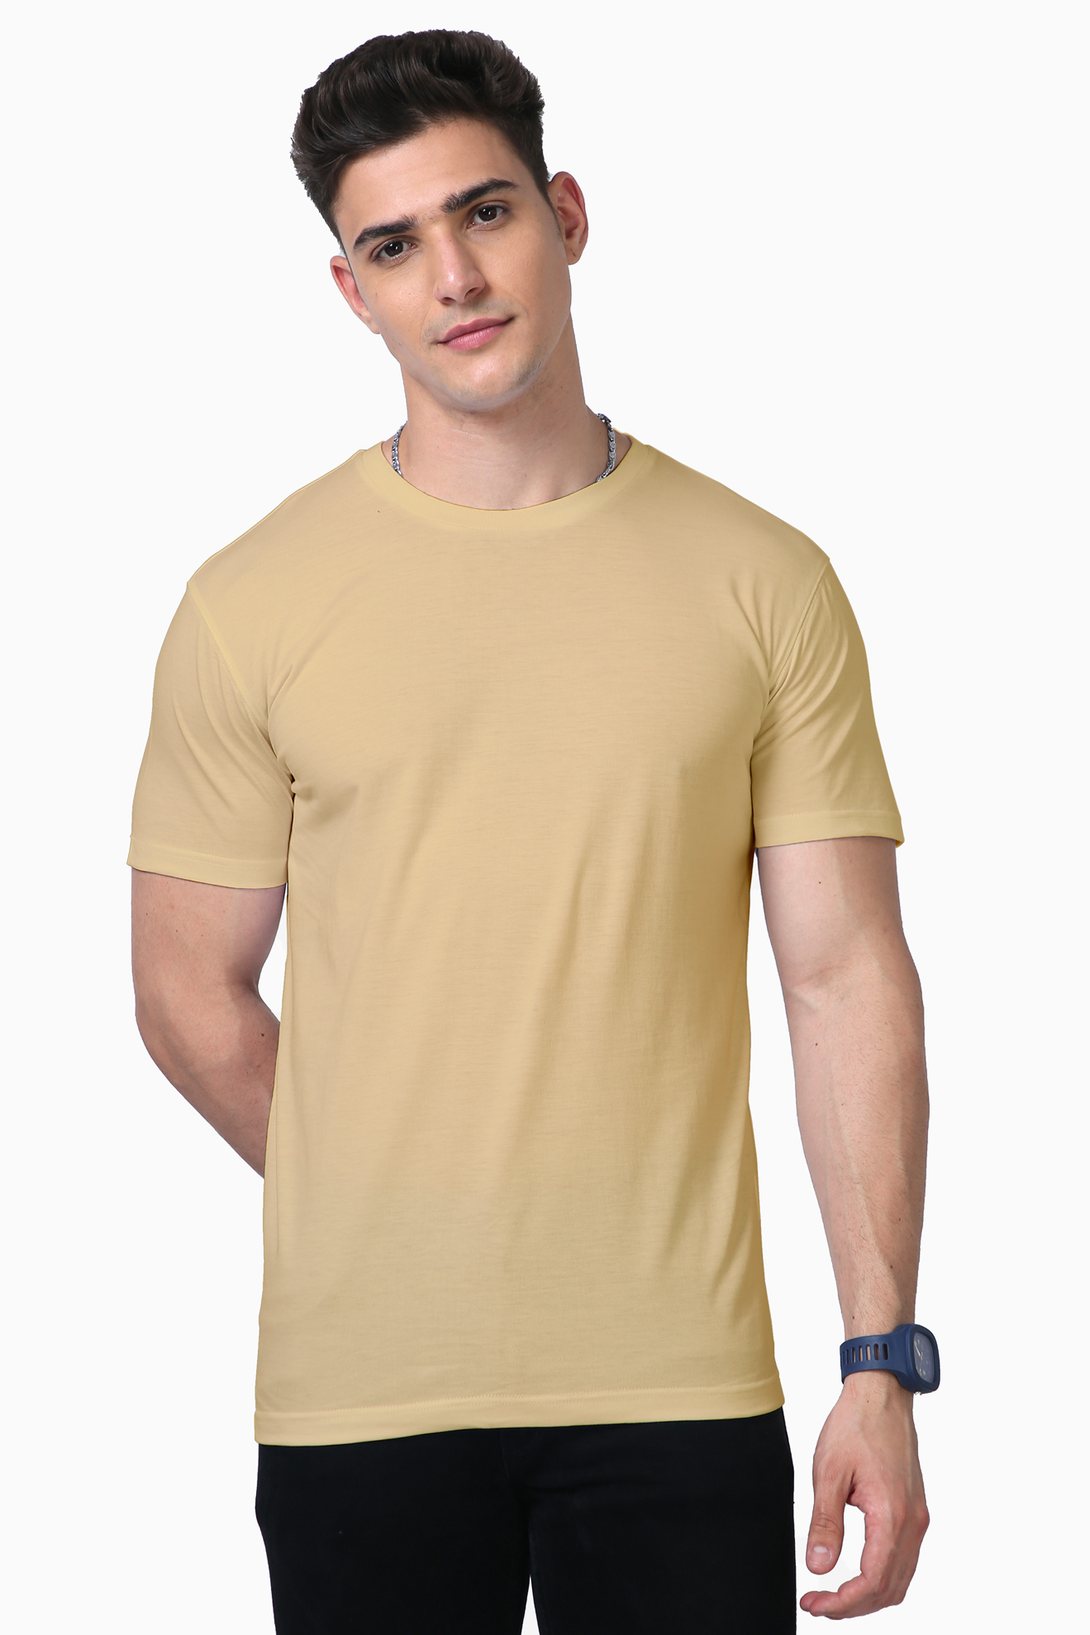 Plain Supima T-Shirts For Men - WowWaves - 5